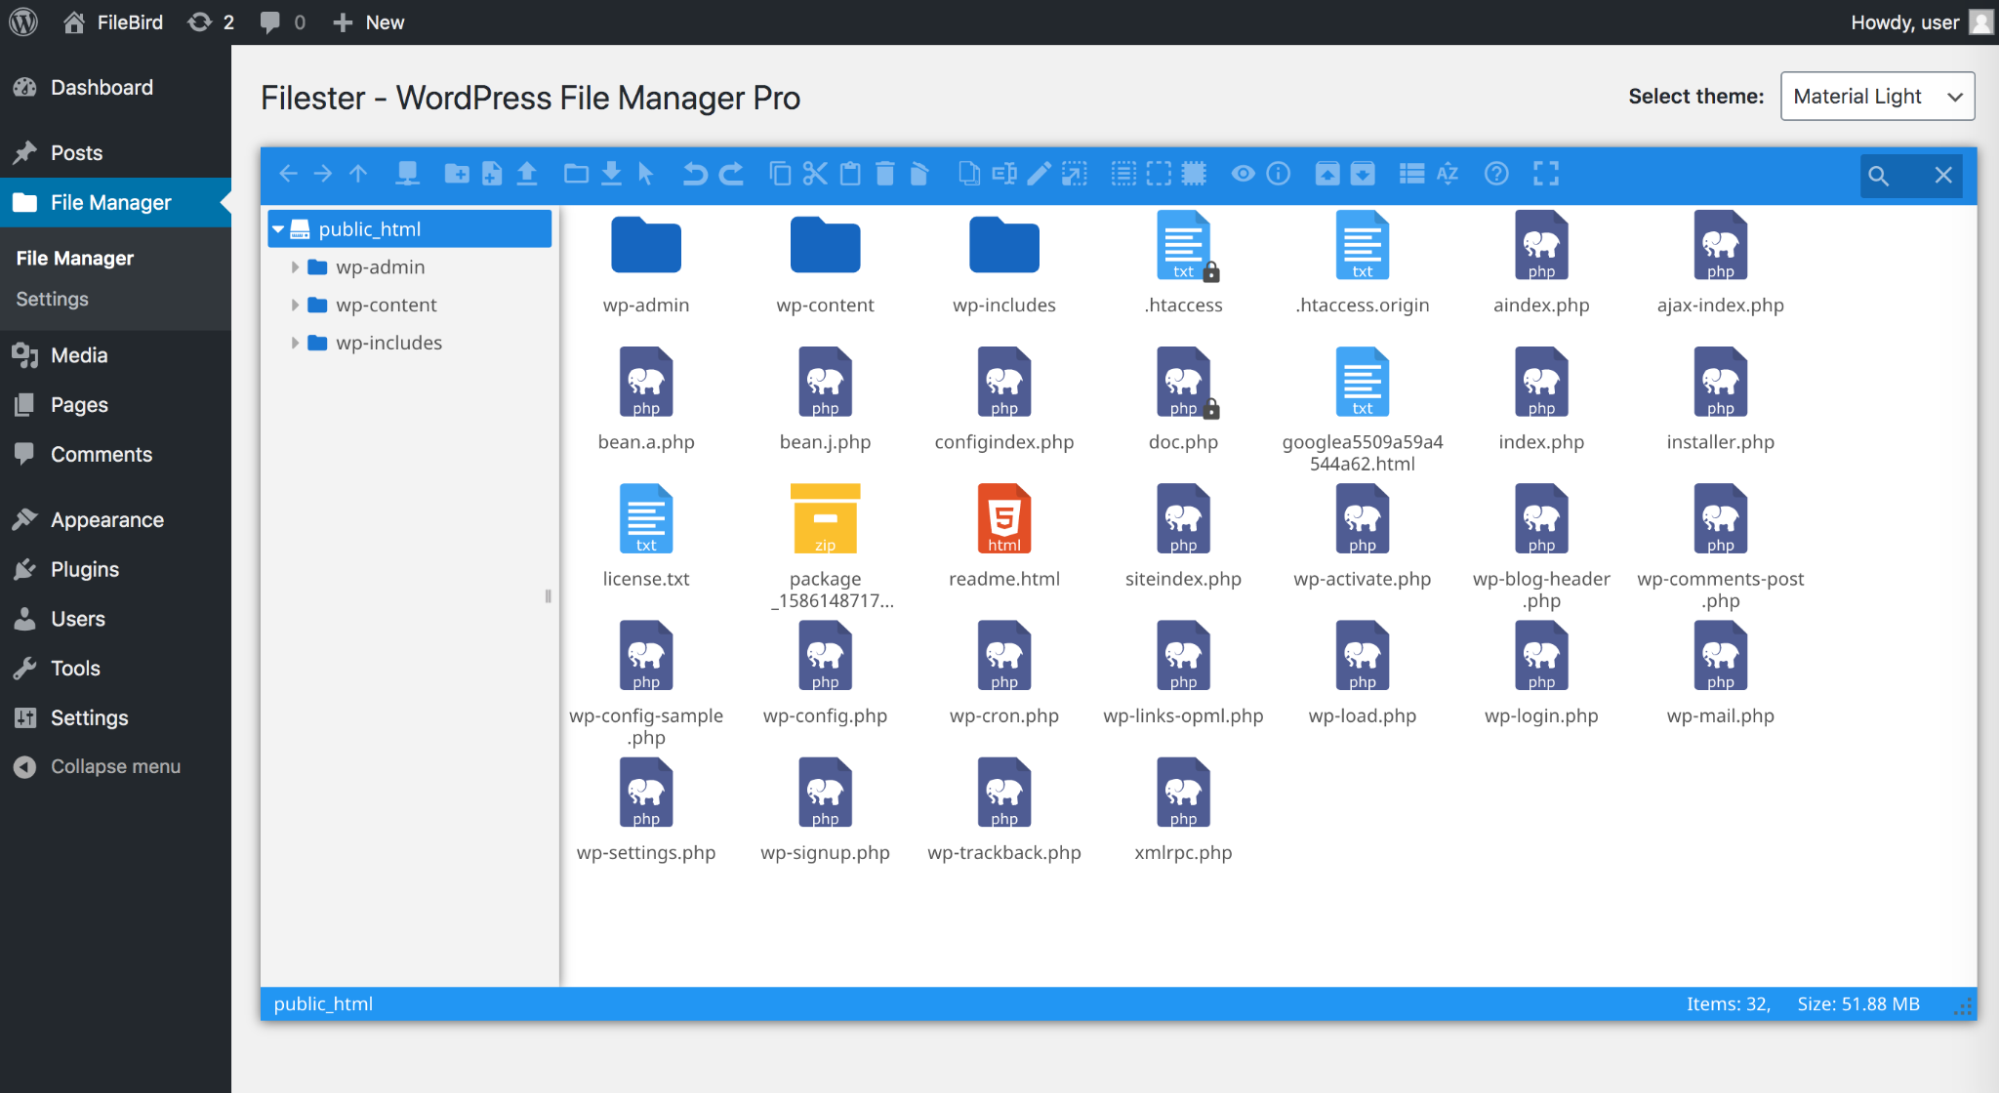 11 Filester WordPress File Manager Pro